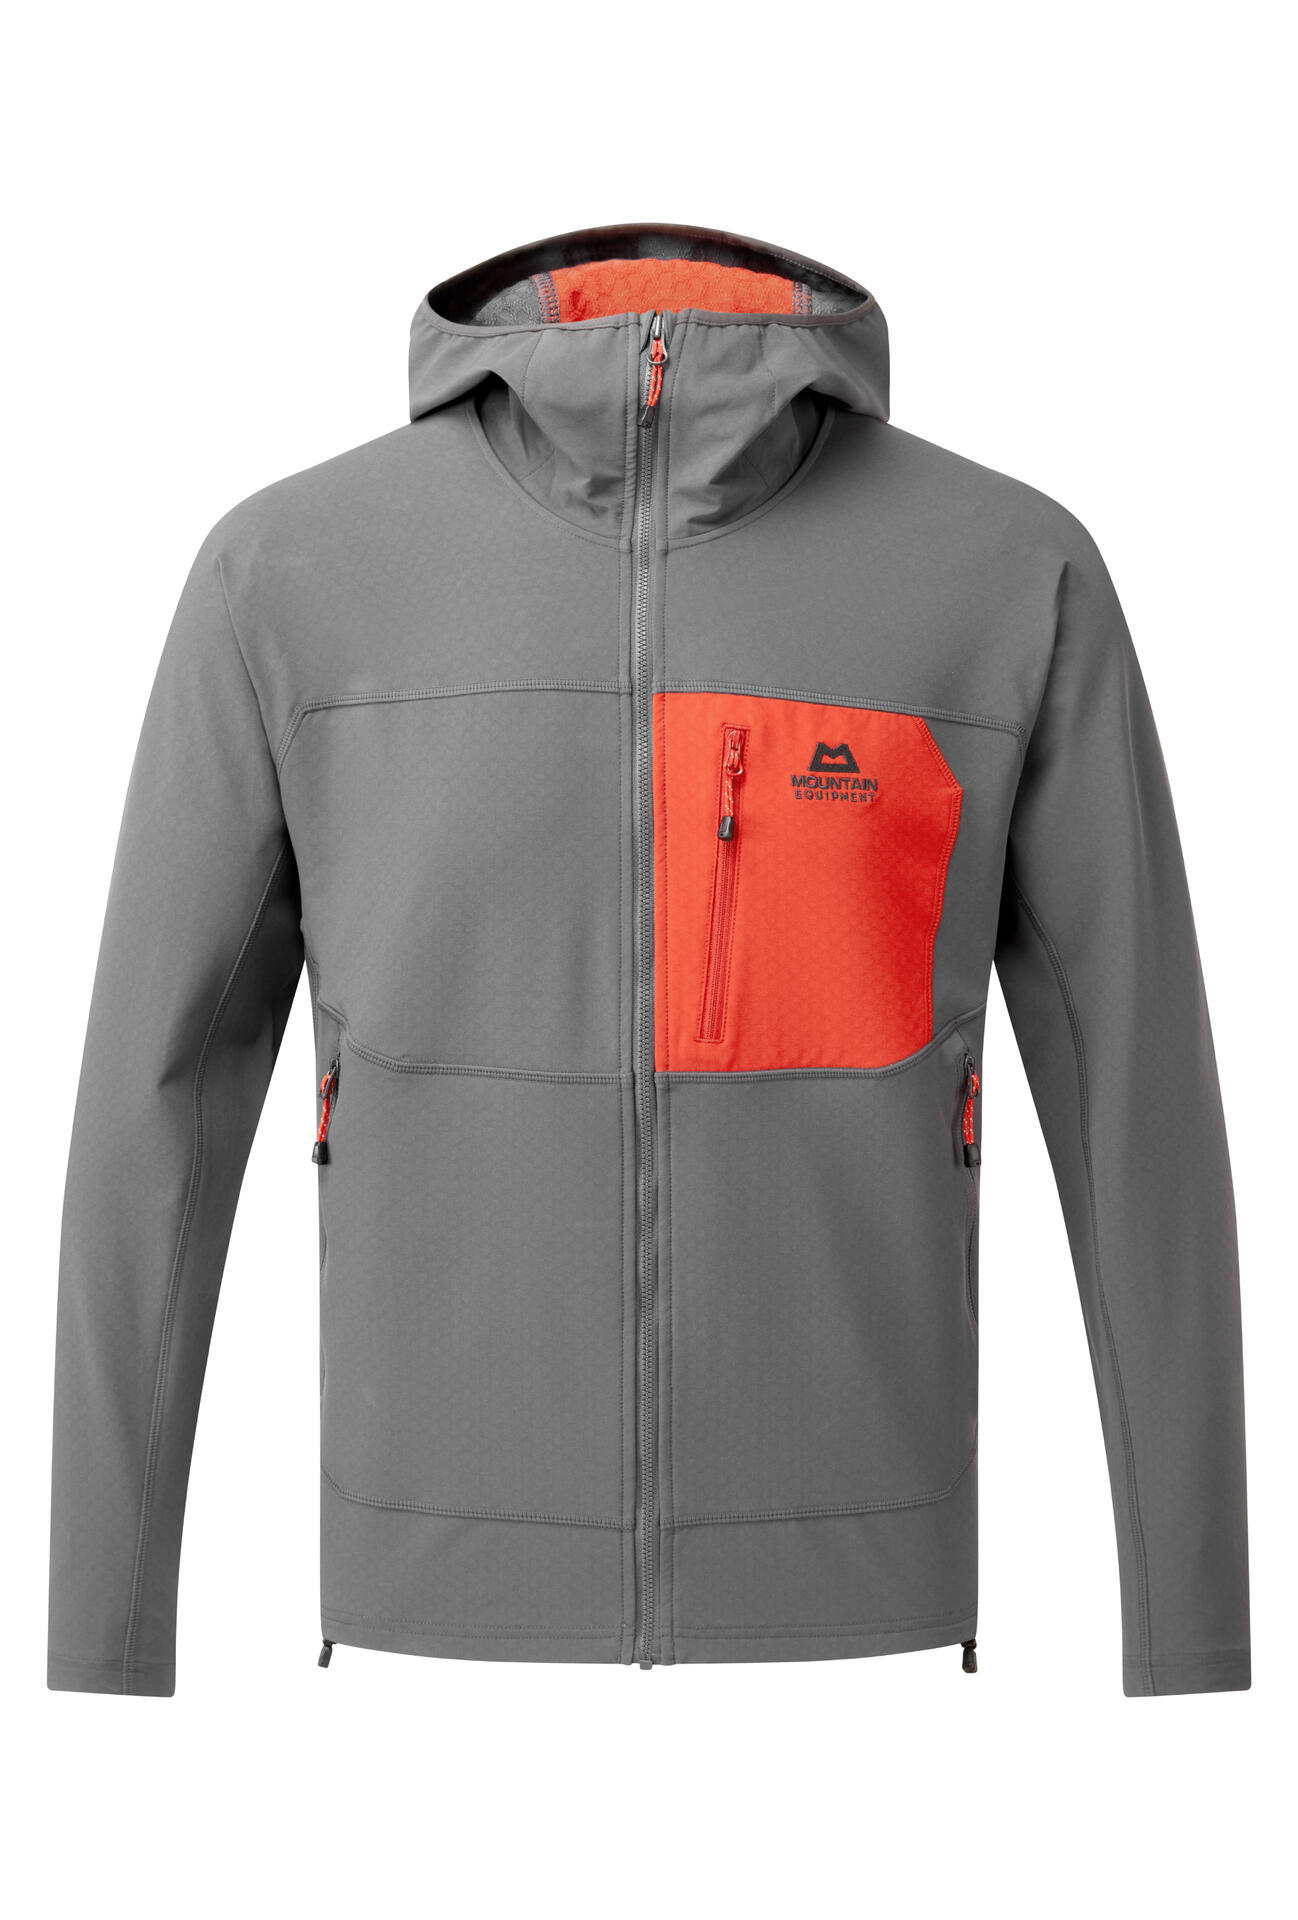 Mountain Equipment Arrow Hooded Jacket Men'S Barva: Anvil Grey/Redrock, Velikost: L